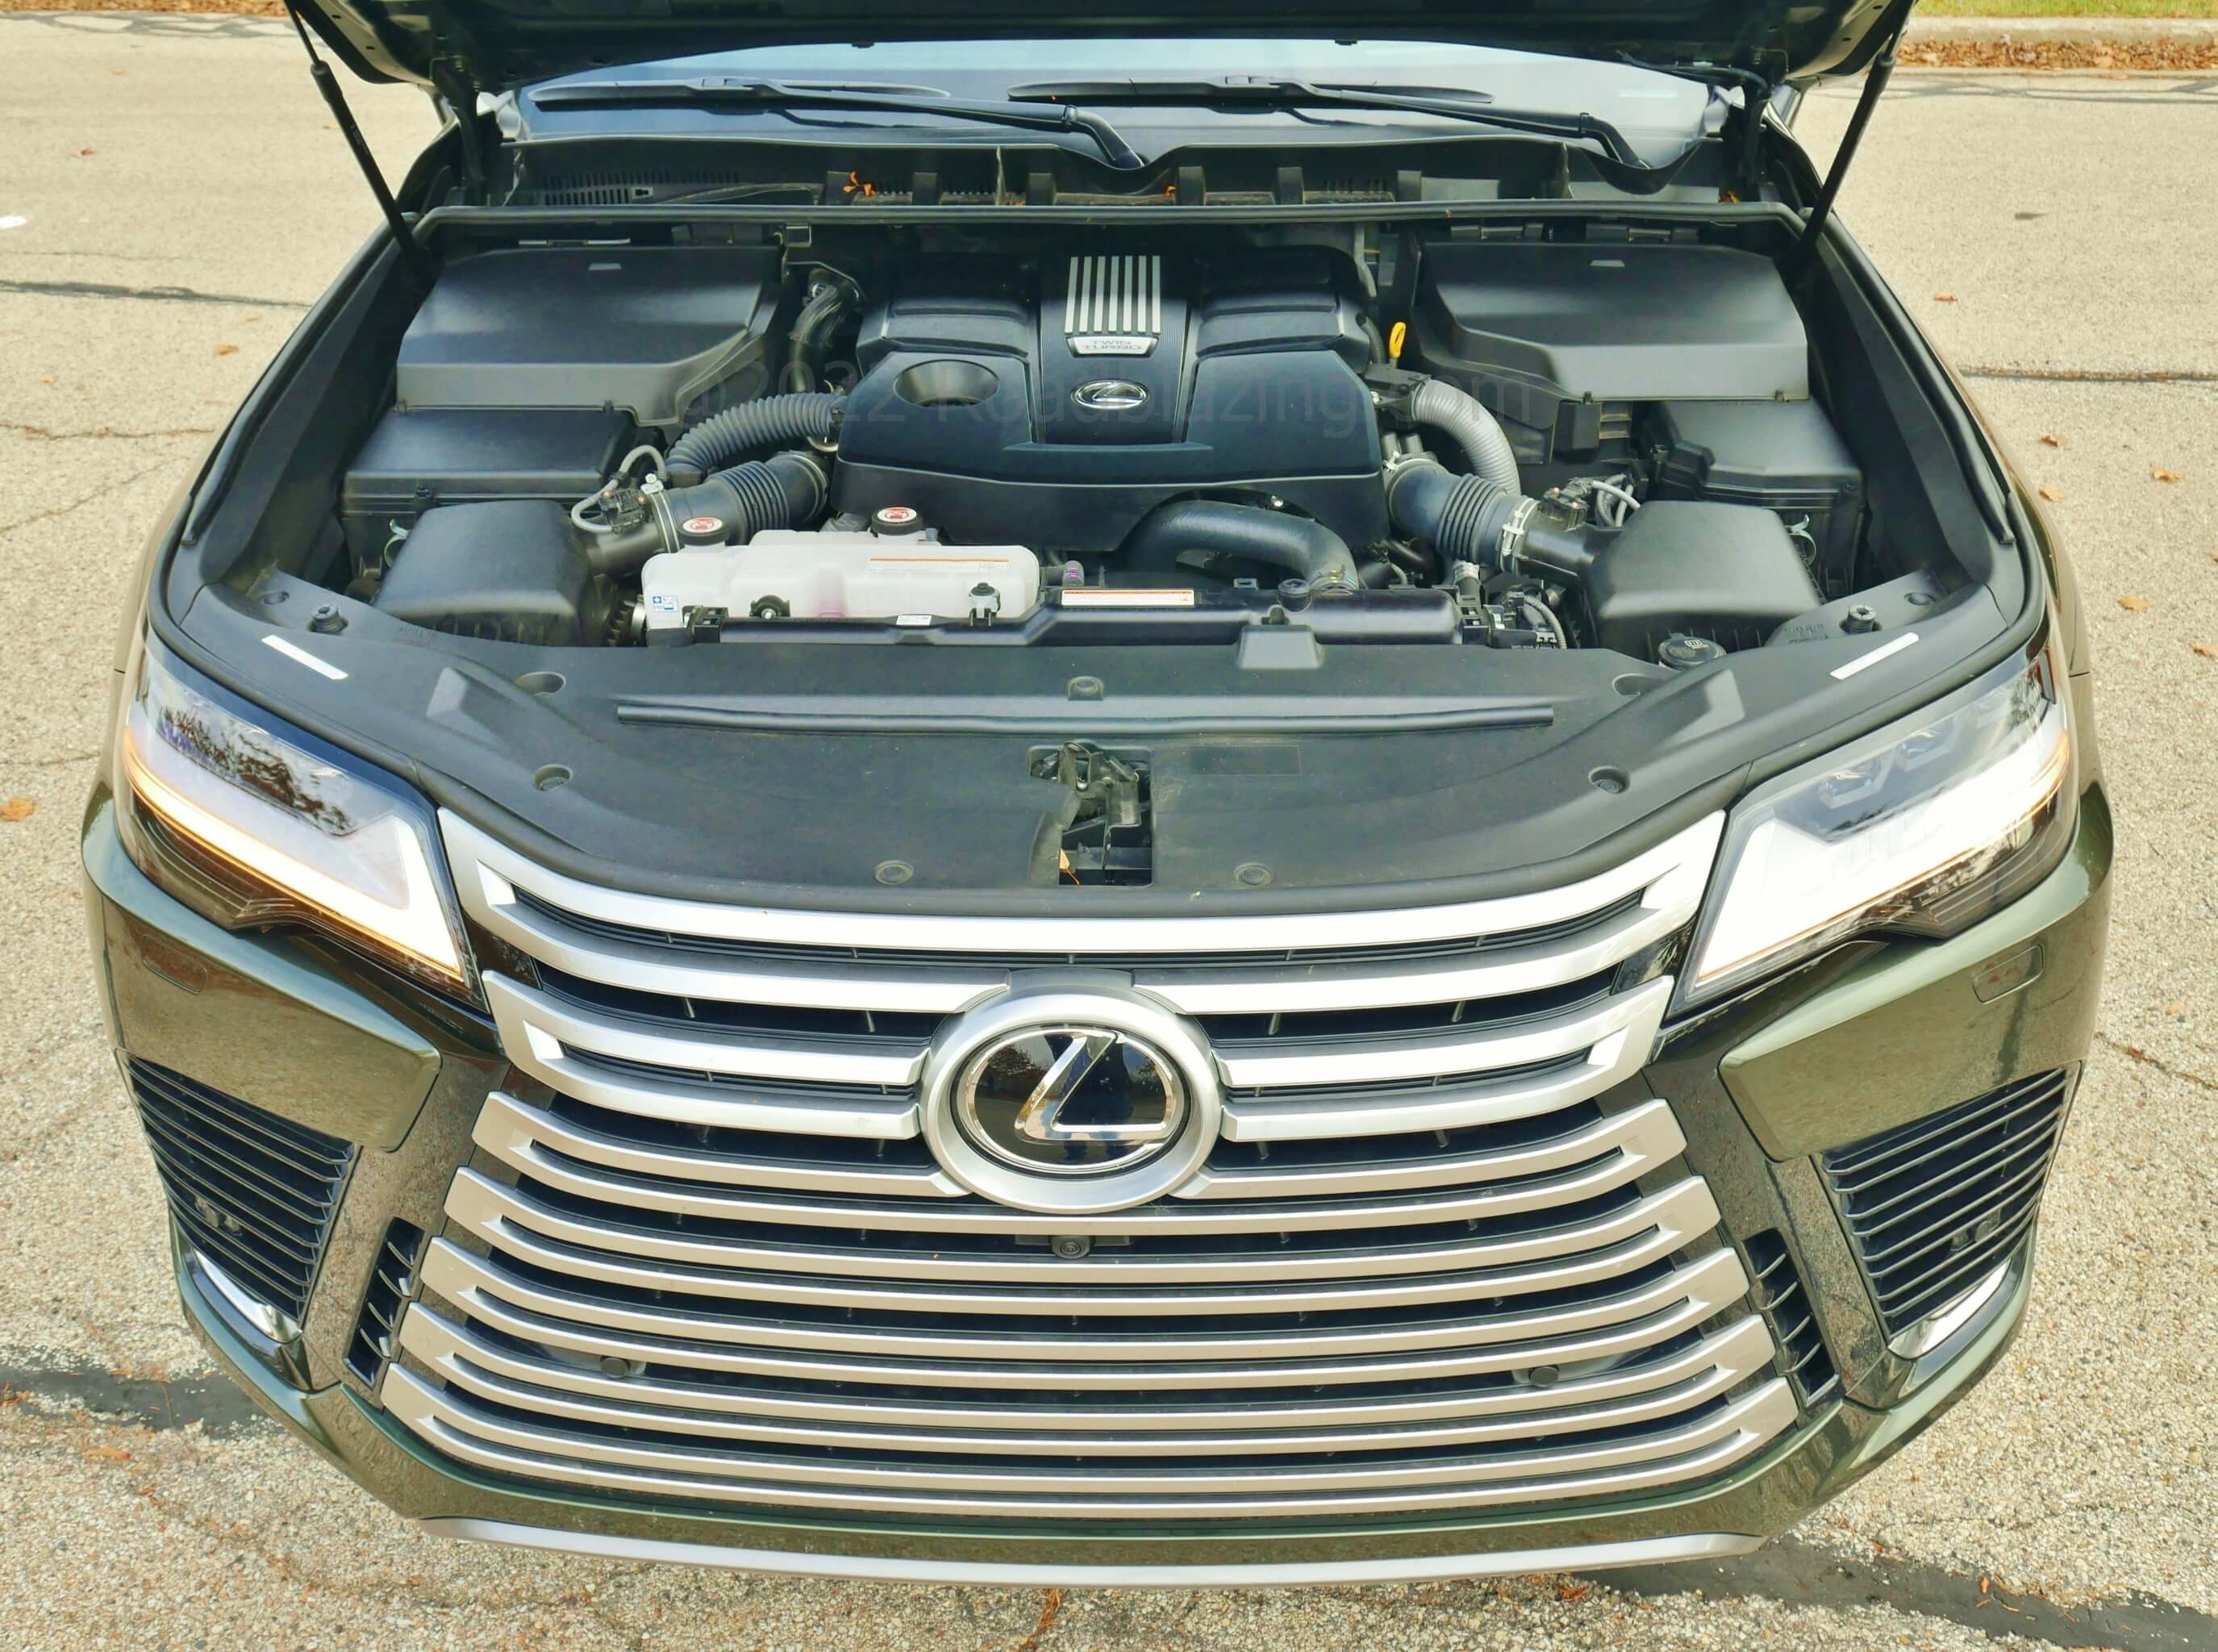 2022 Lexus LX 600 Ultra Luxury: flagship sedan's twin turbo V-6 powerplant transplanted along with 10-speed automatic transmission